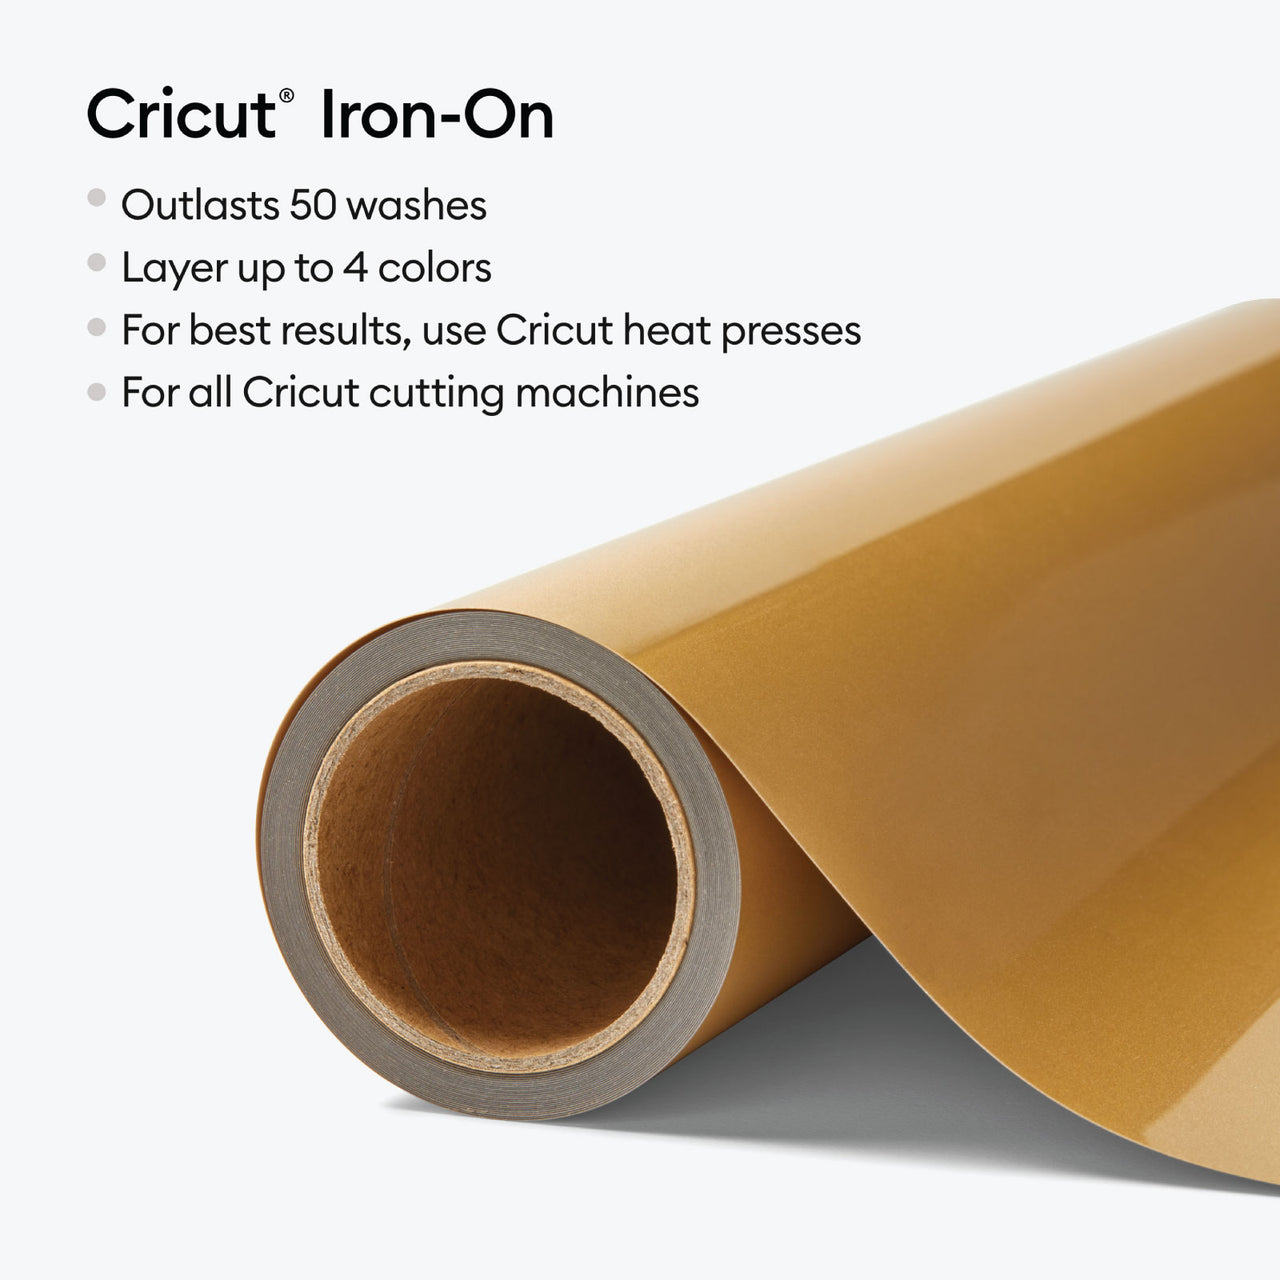 Cricut Iron-On 12 ft Gold - Damaged Package